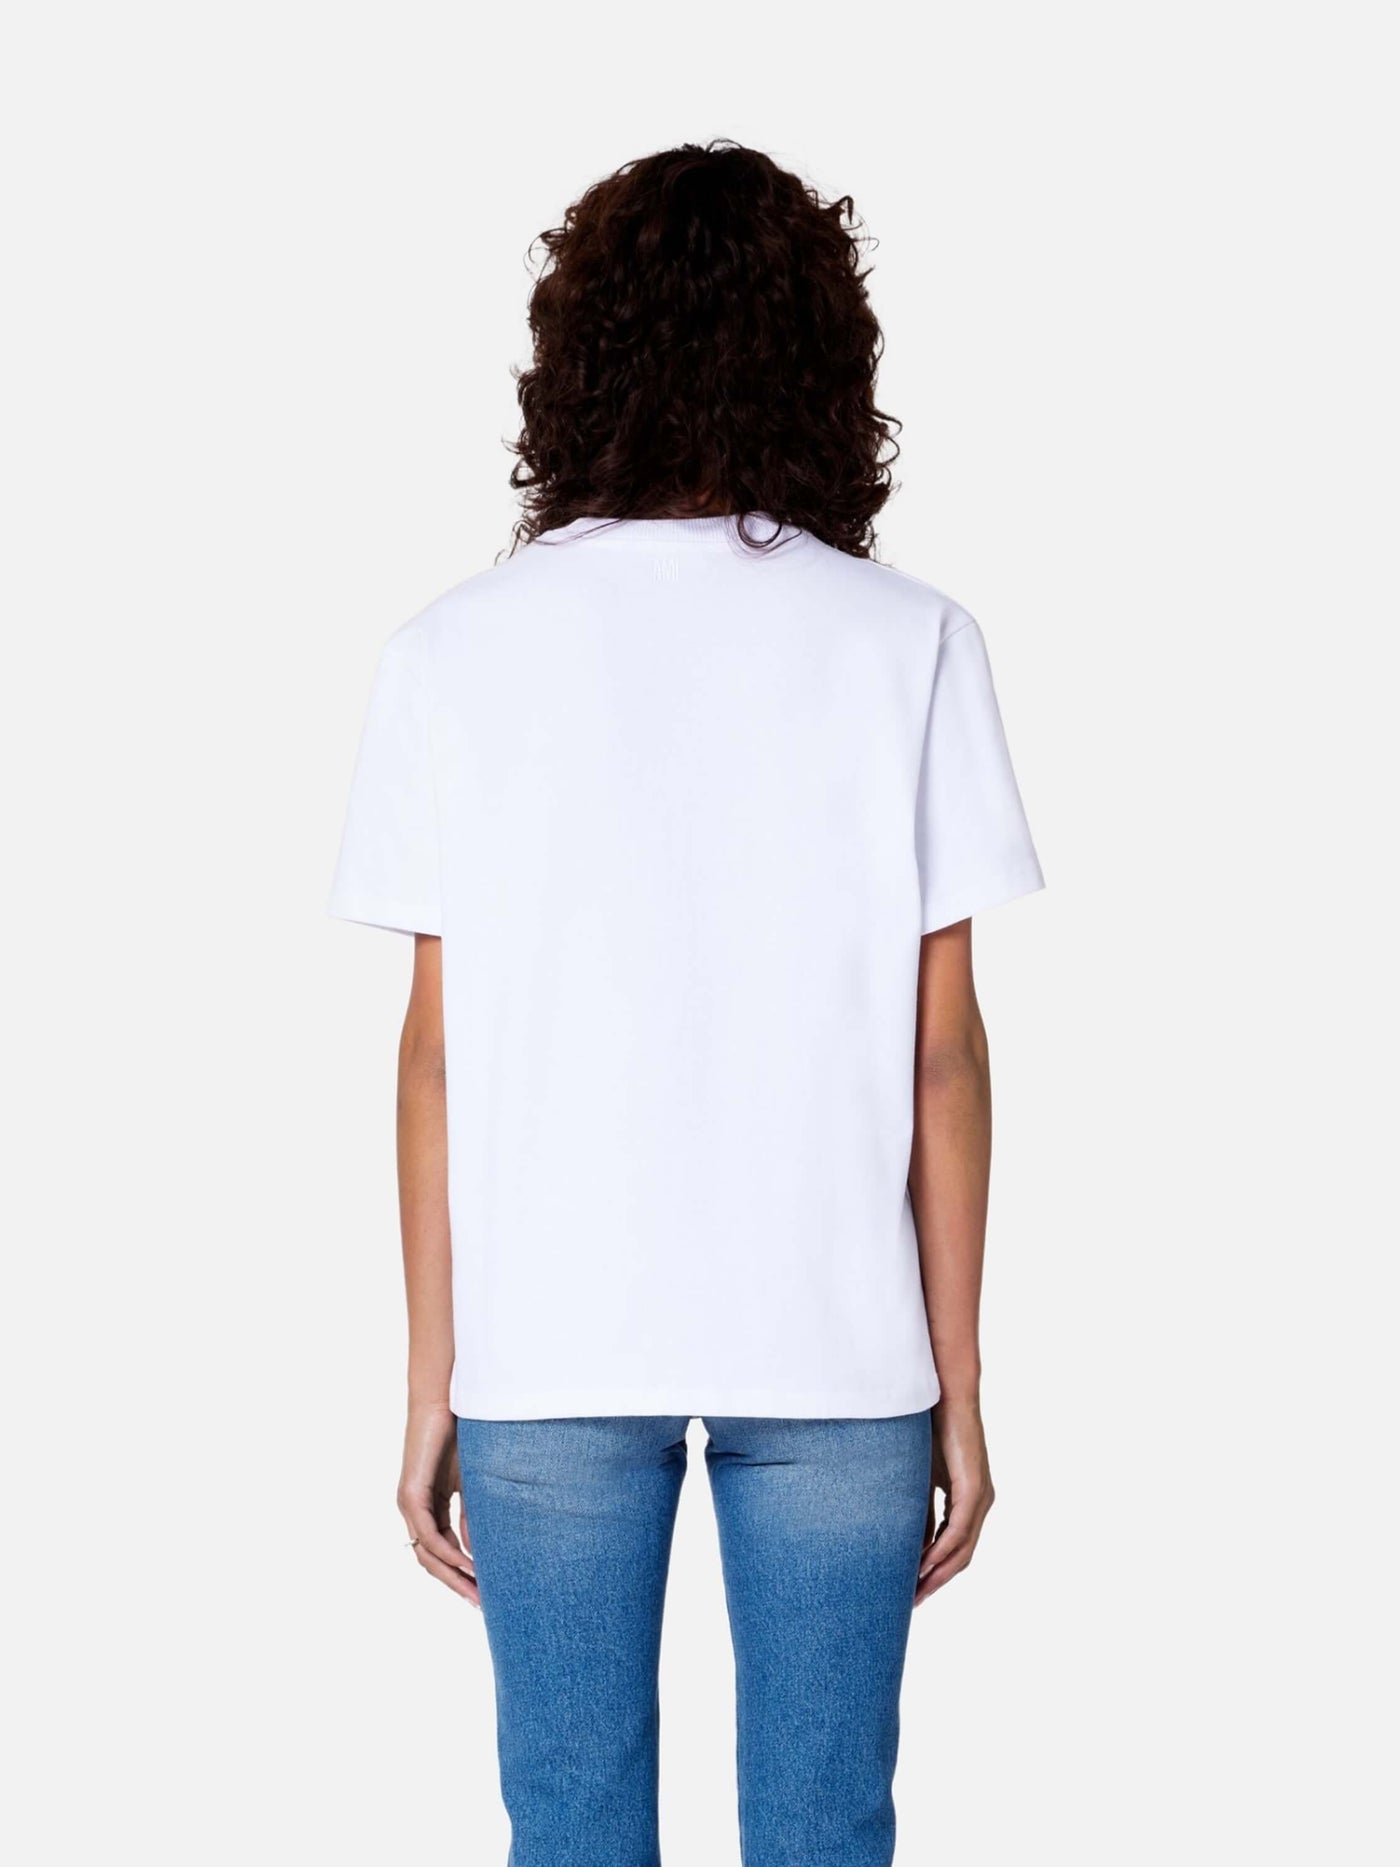 AMI Paris Shirts & Tops | T-Shirt AMI Paris weiß | UTS014.701 251 white / ADAM/EVE